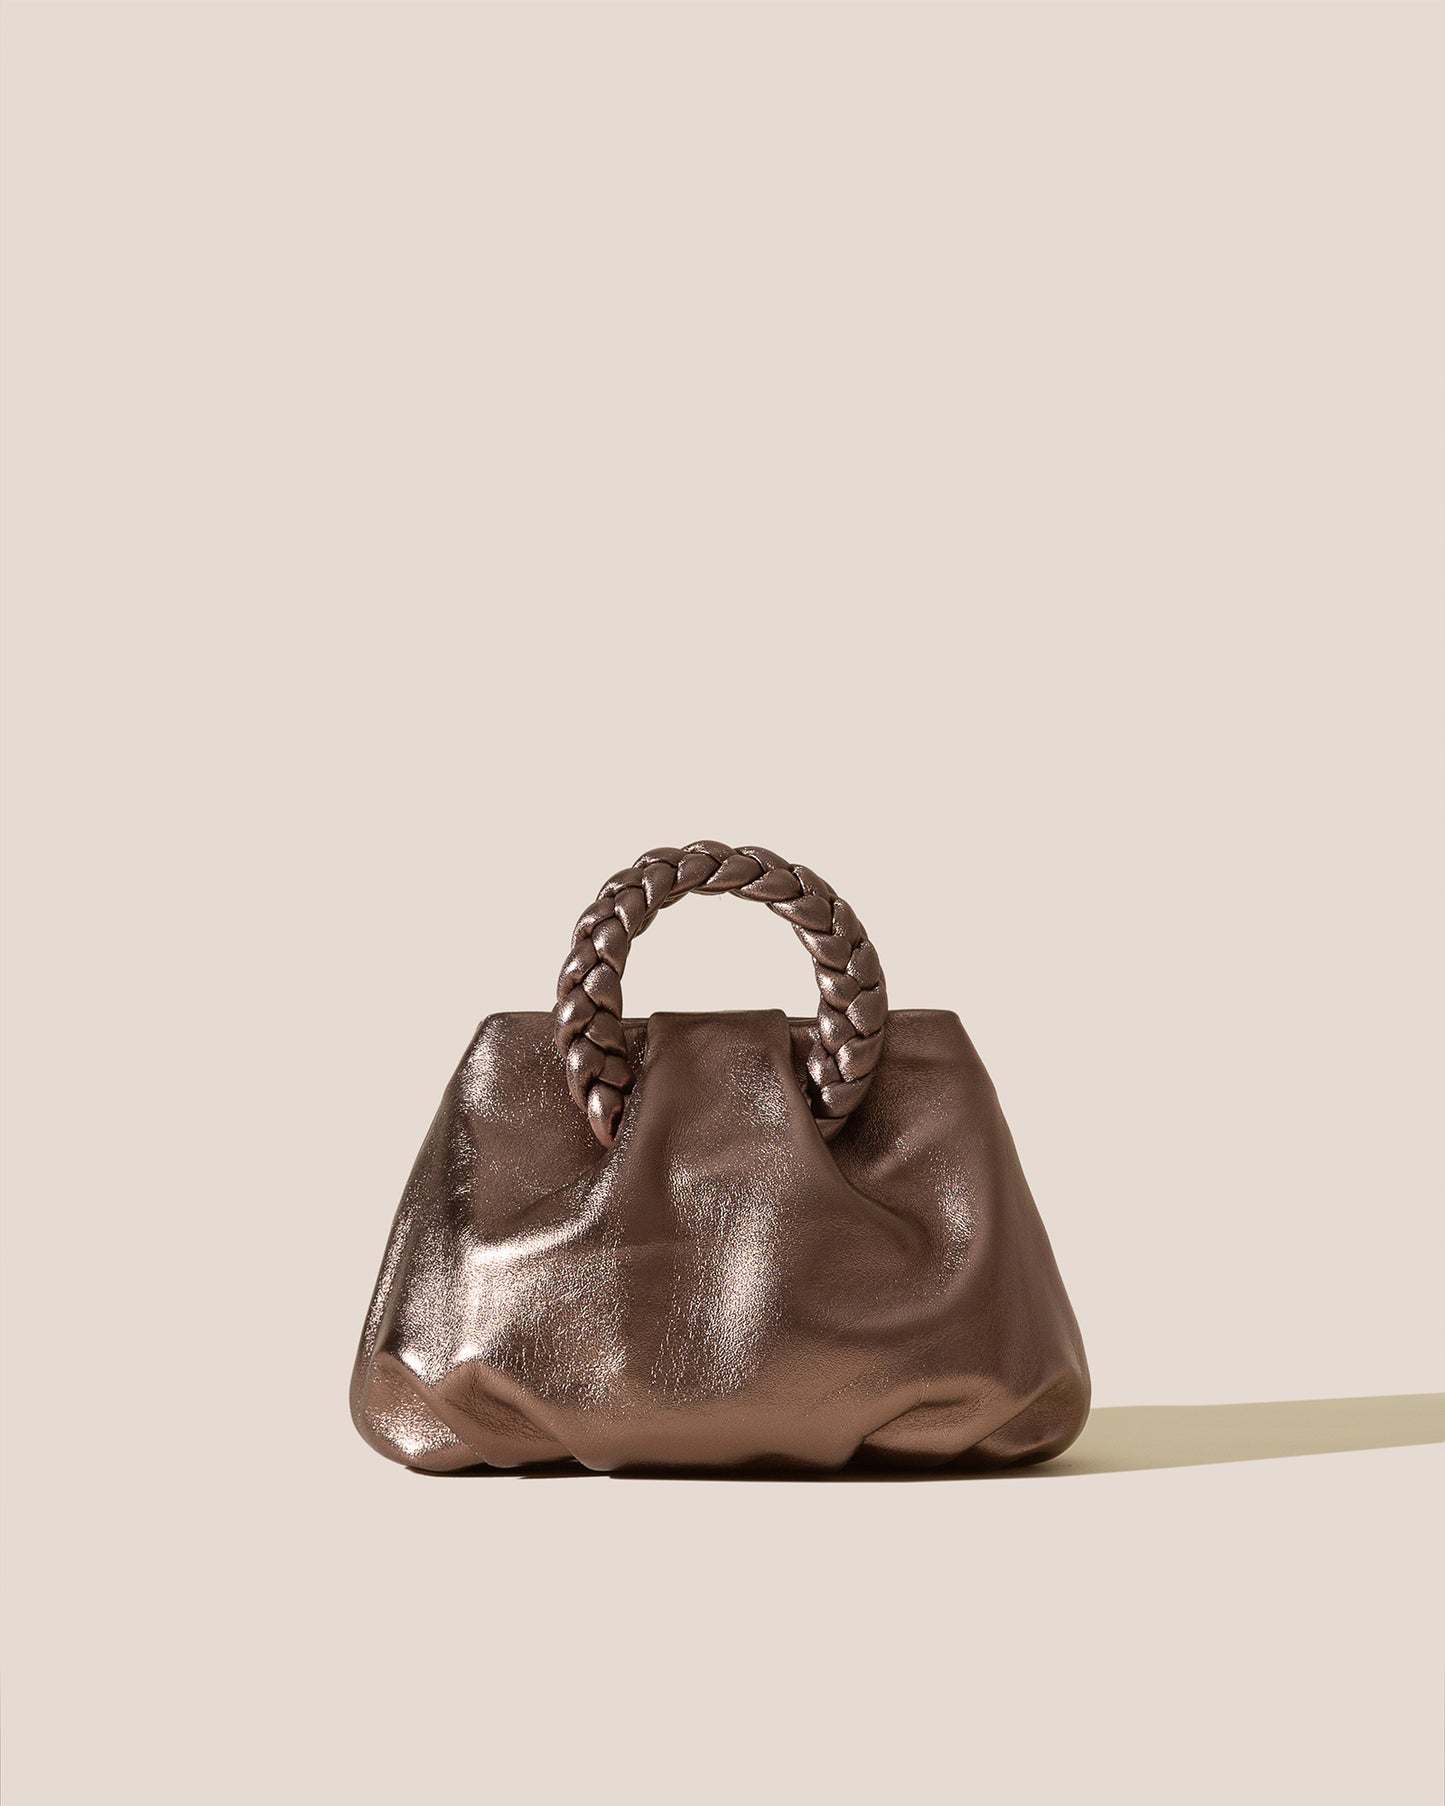 HEREU Bombon braided handle leather handbag